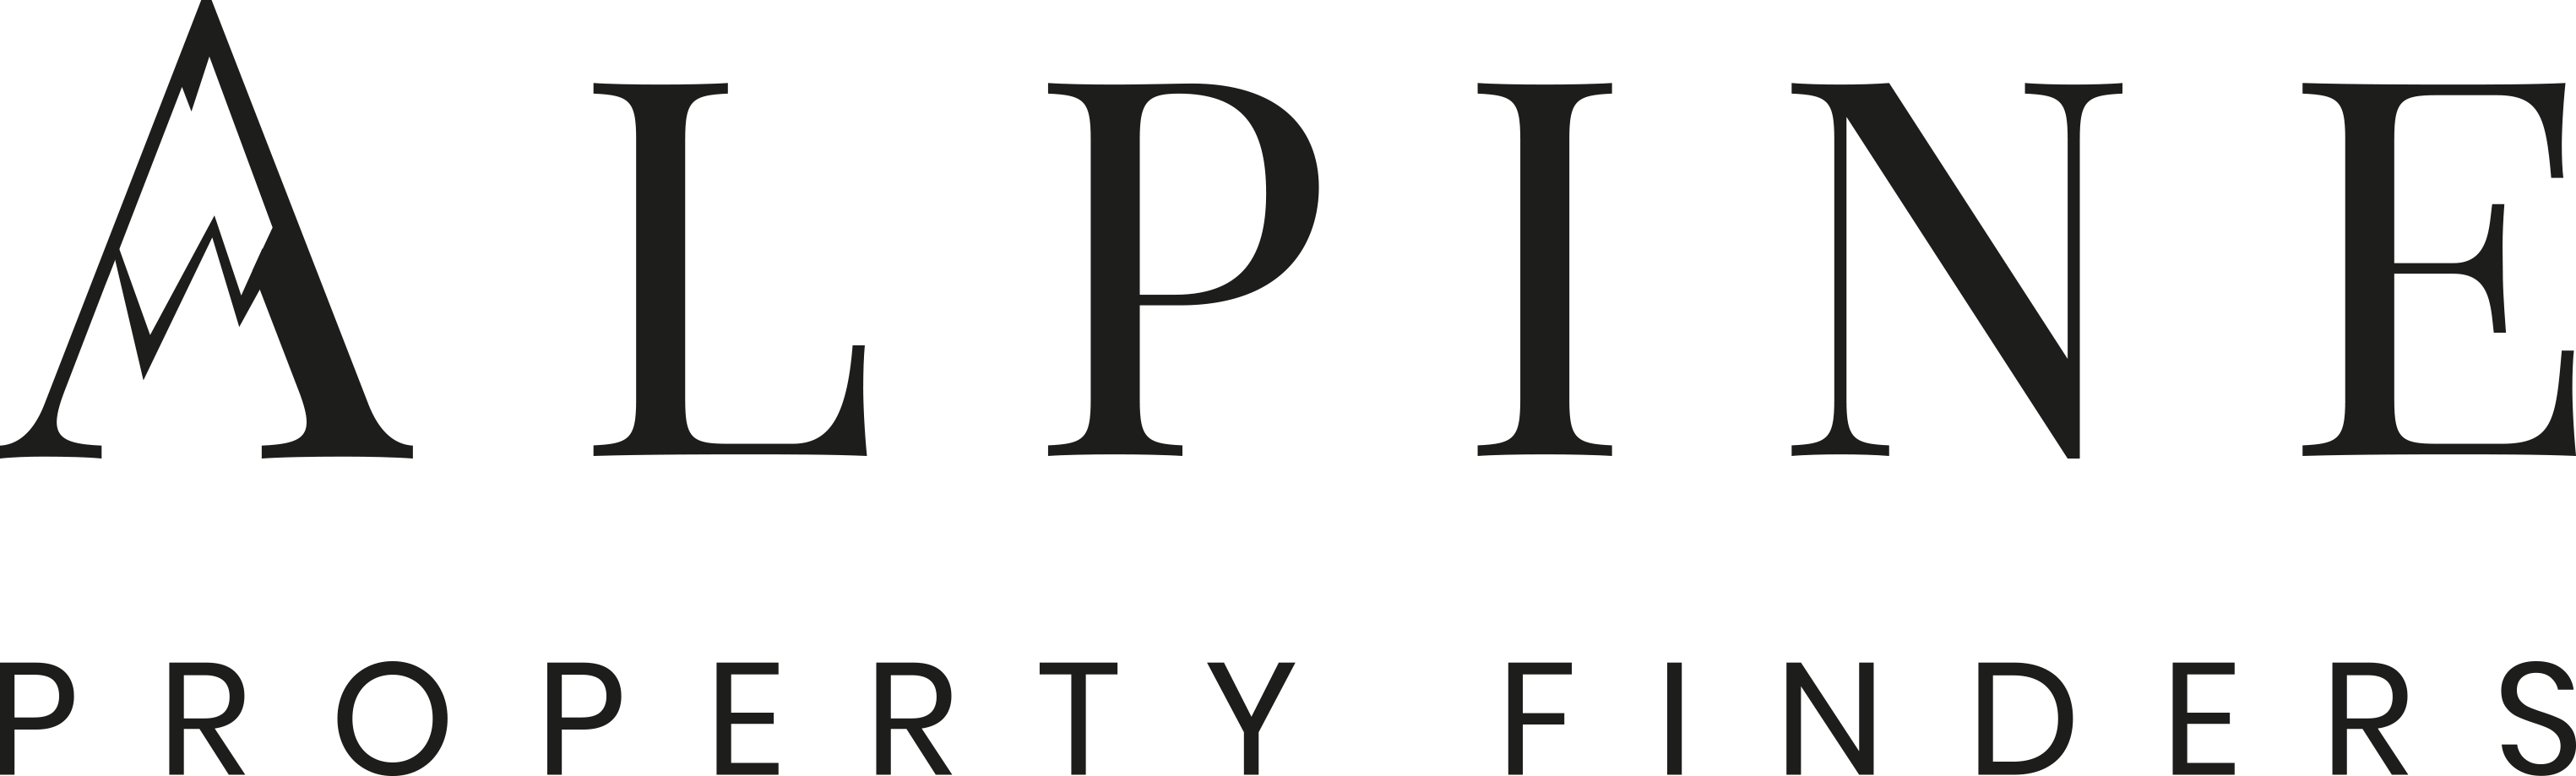 Alpine Property Finders Logo - Black